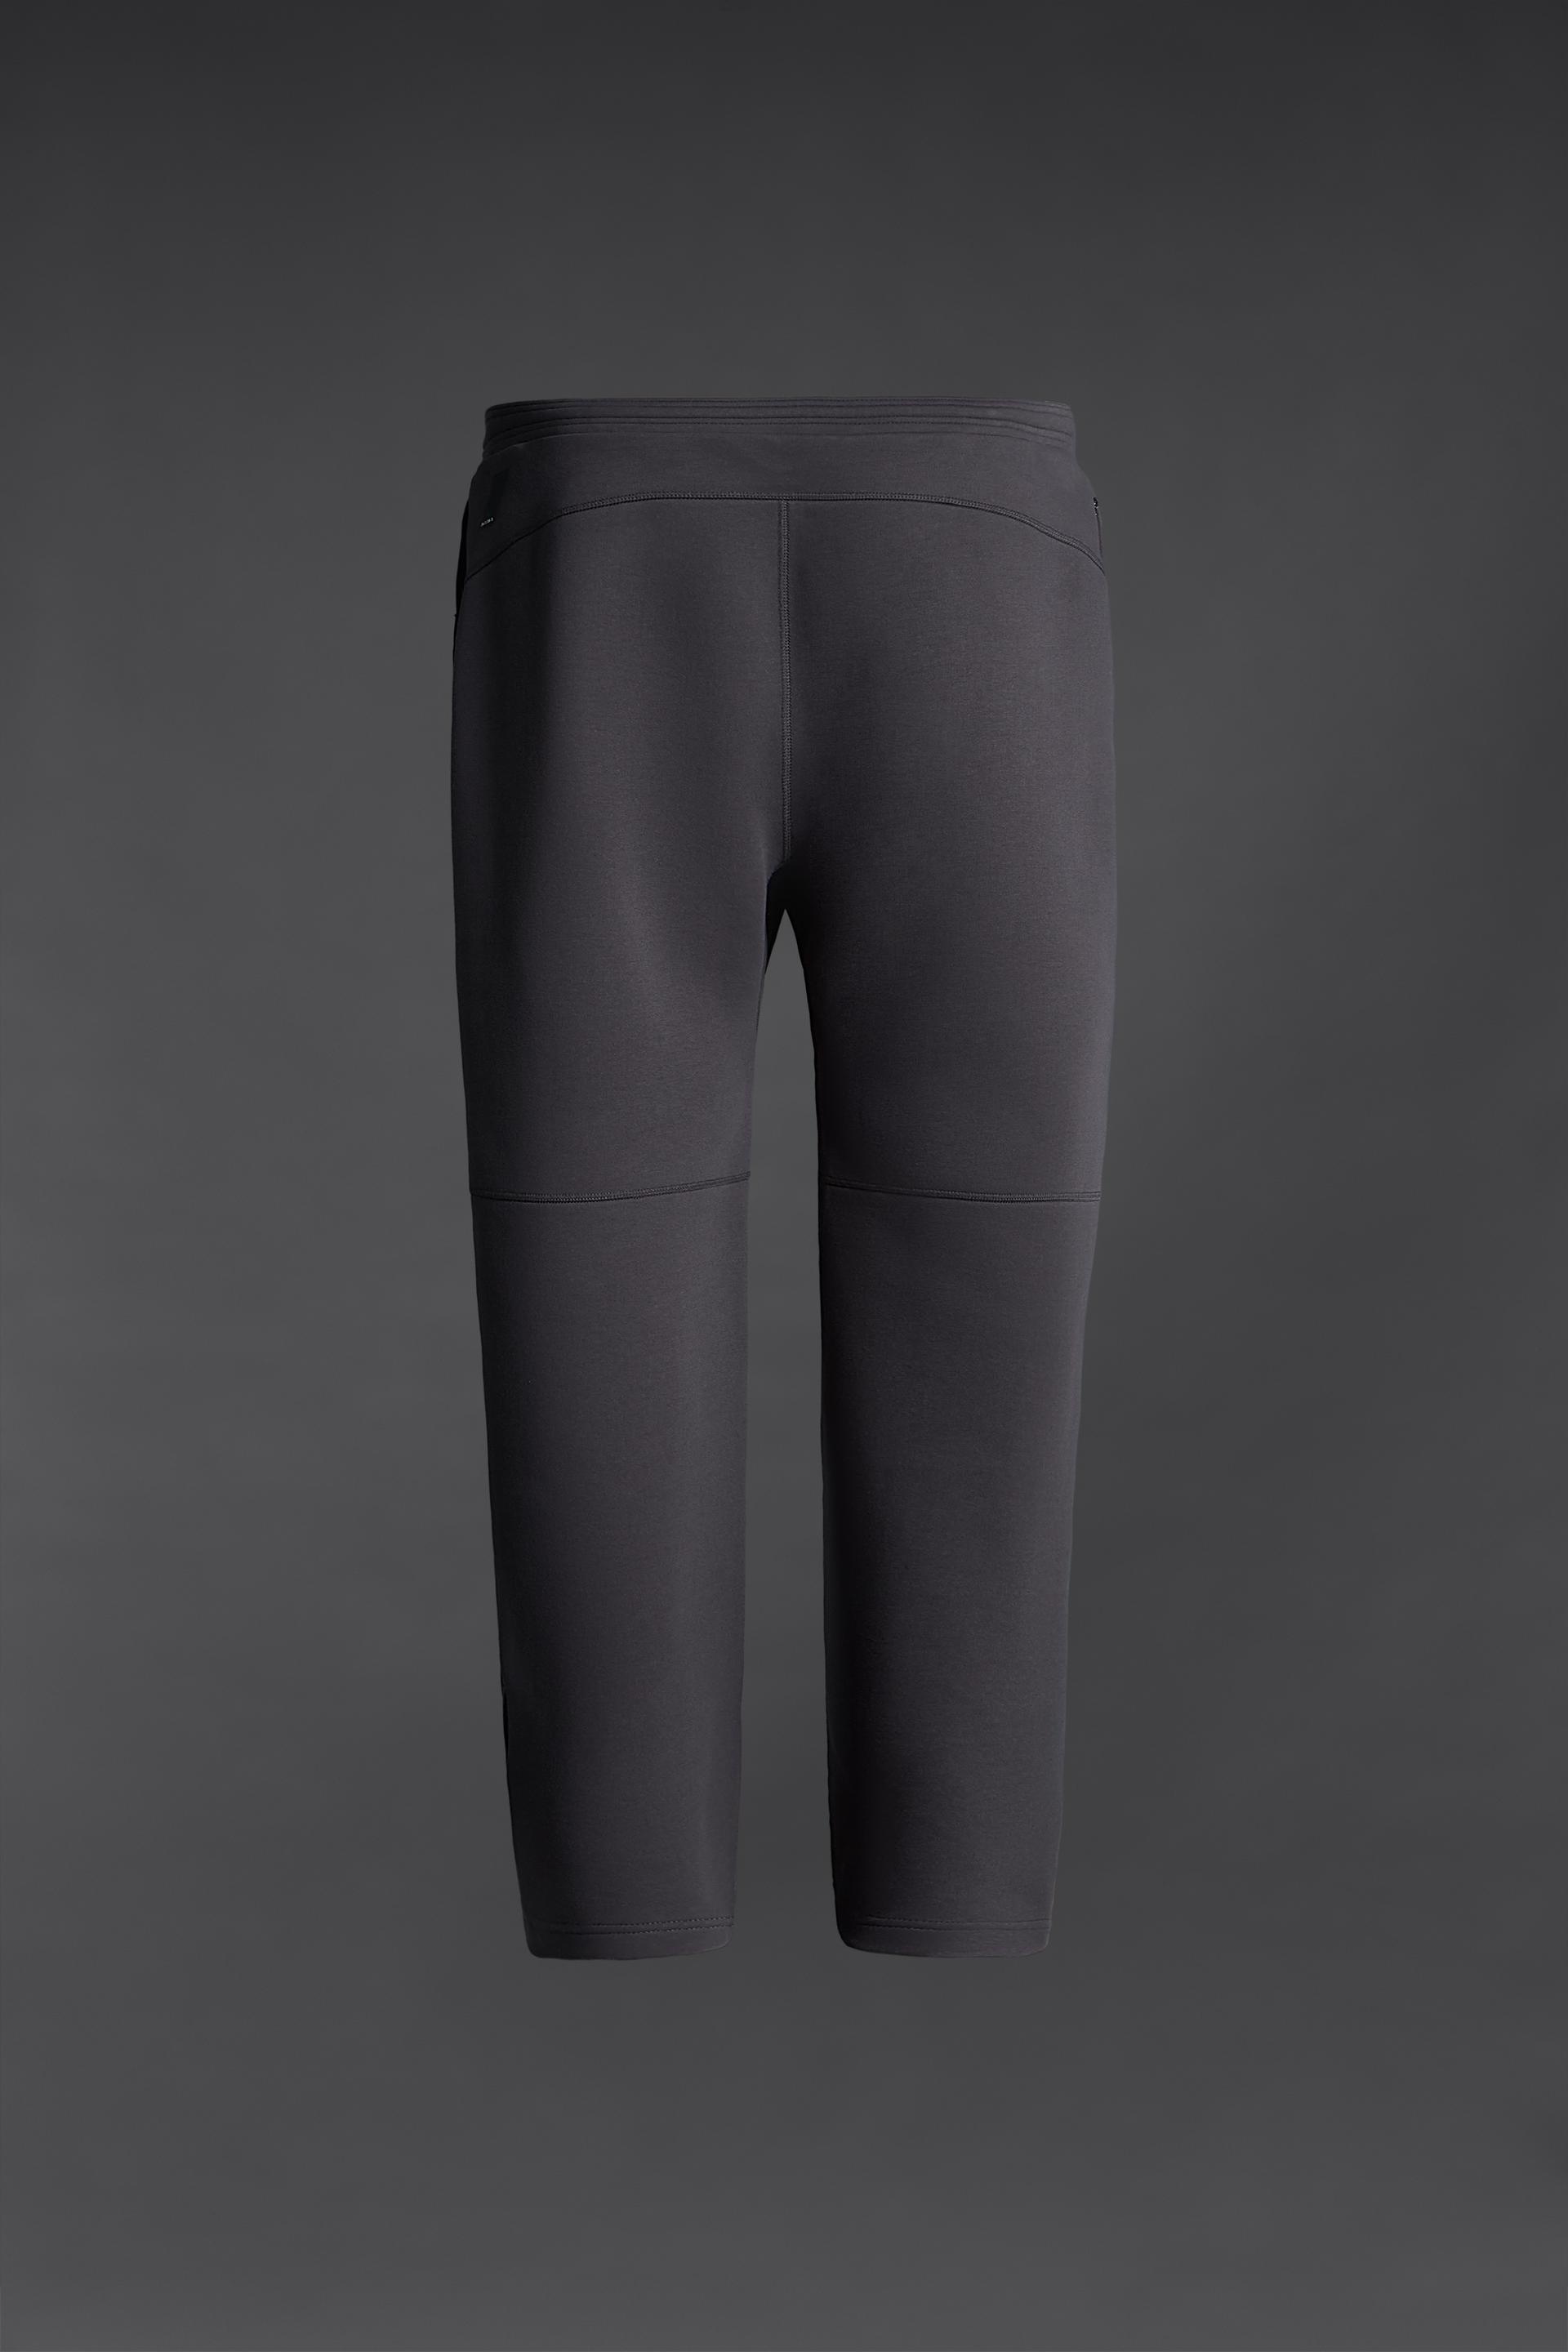 Zara Neoprene effect sweatshirt with joggers pants - Light Blue Both Medium  Size 